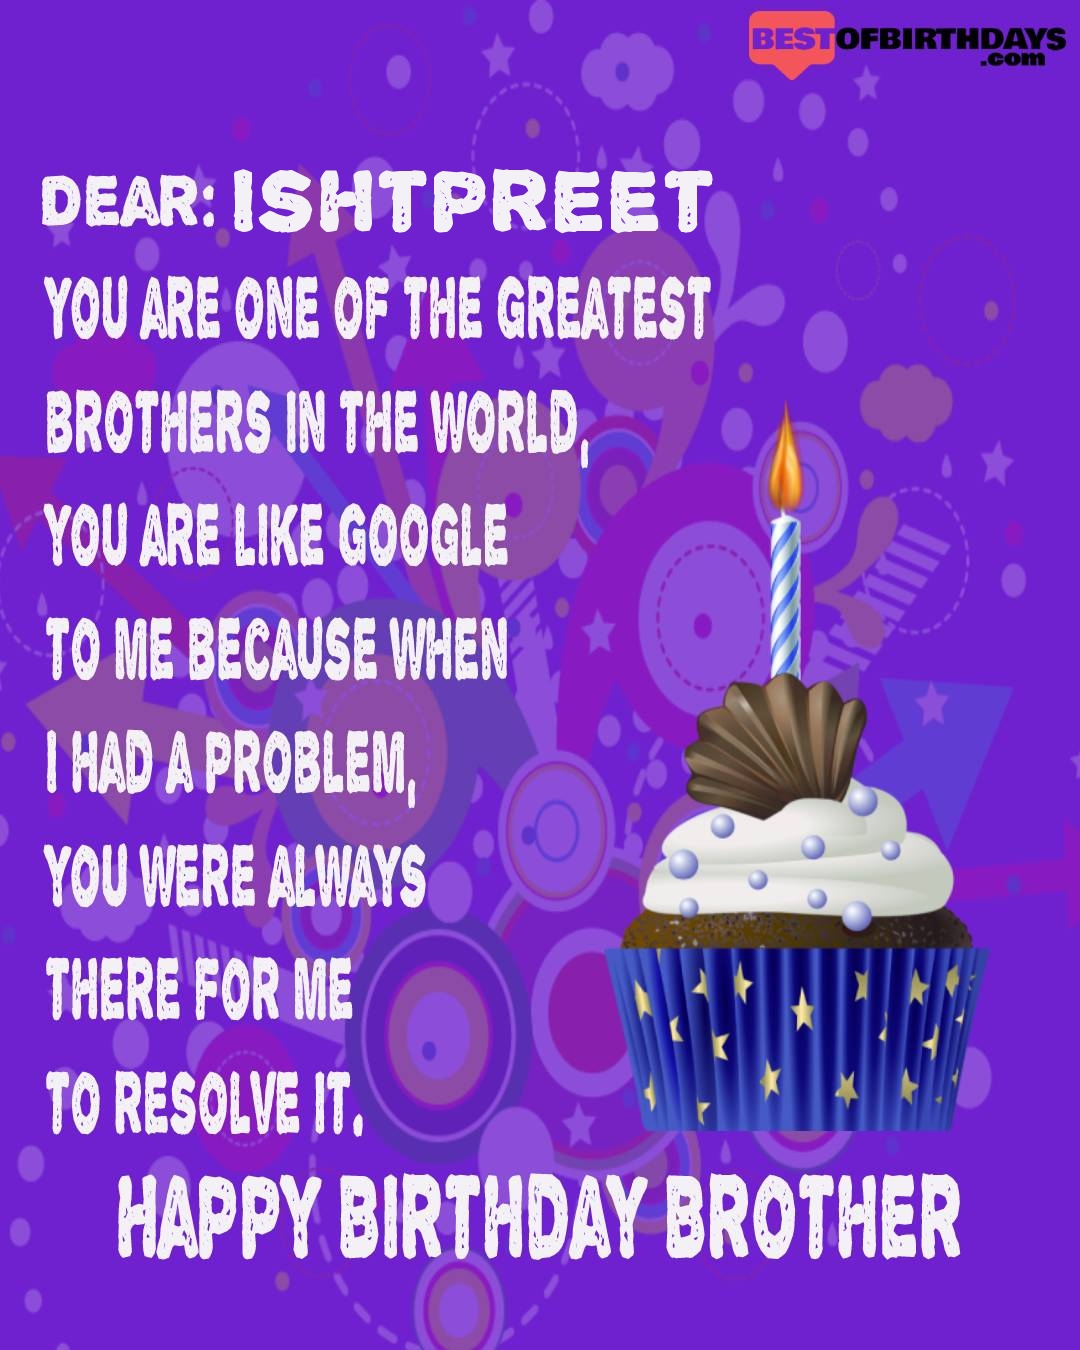 Happy birthday ishtpreet bhai brother bro